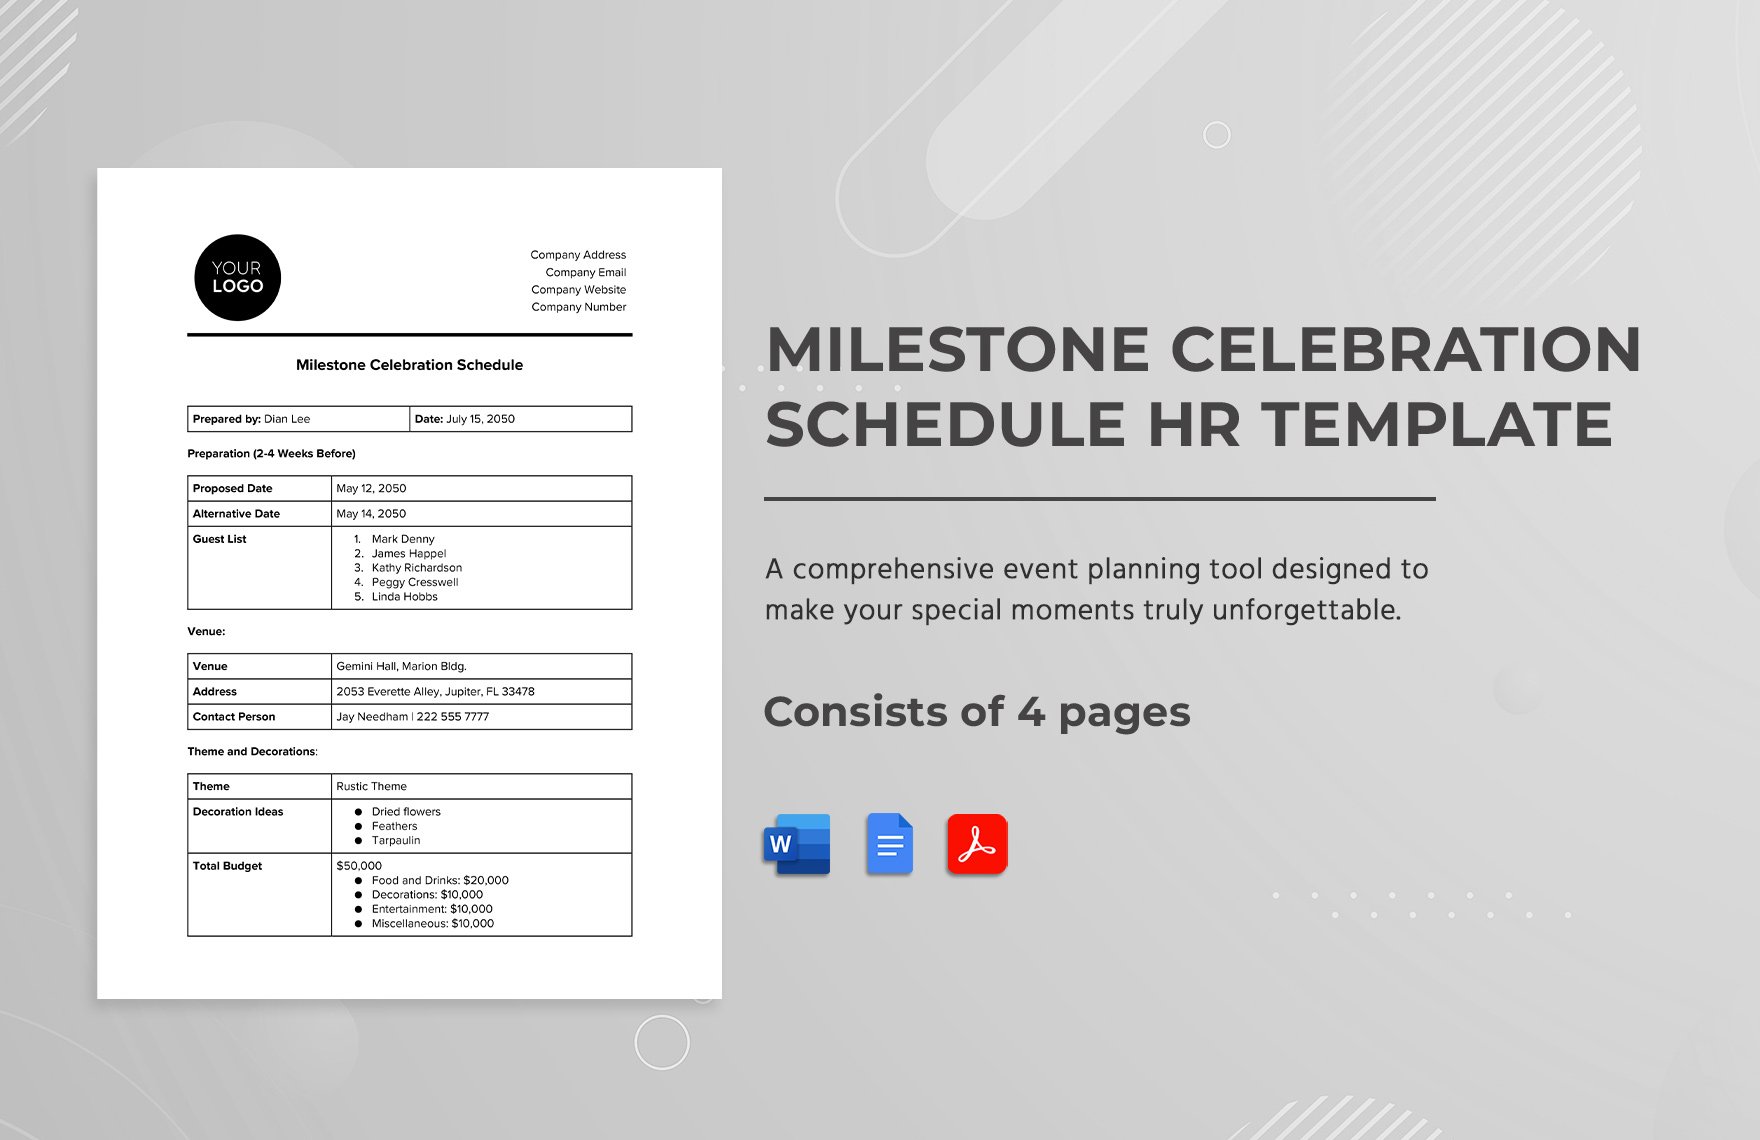 Milestone Celebration Schedule HR Template in Word, Google Docs, PDF